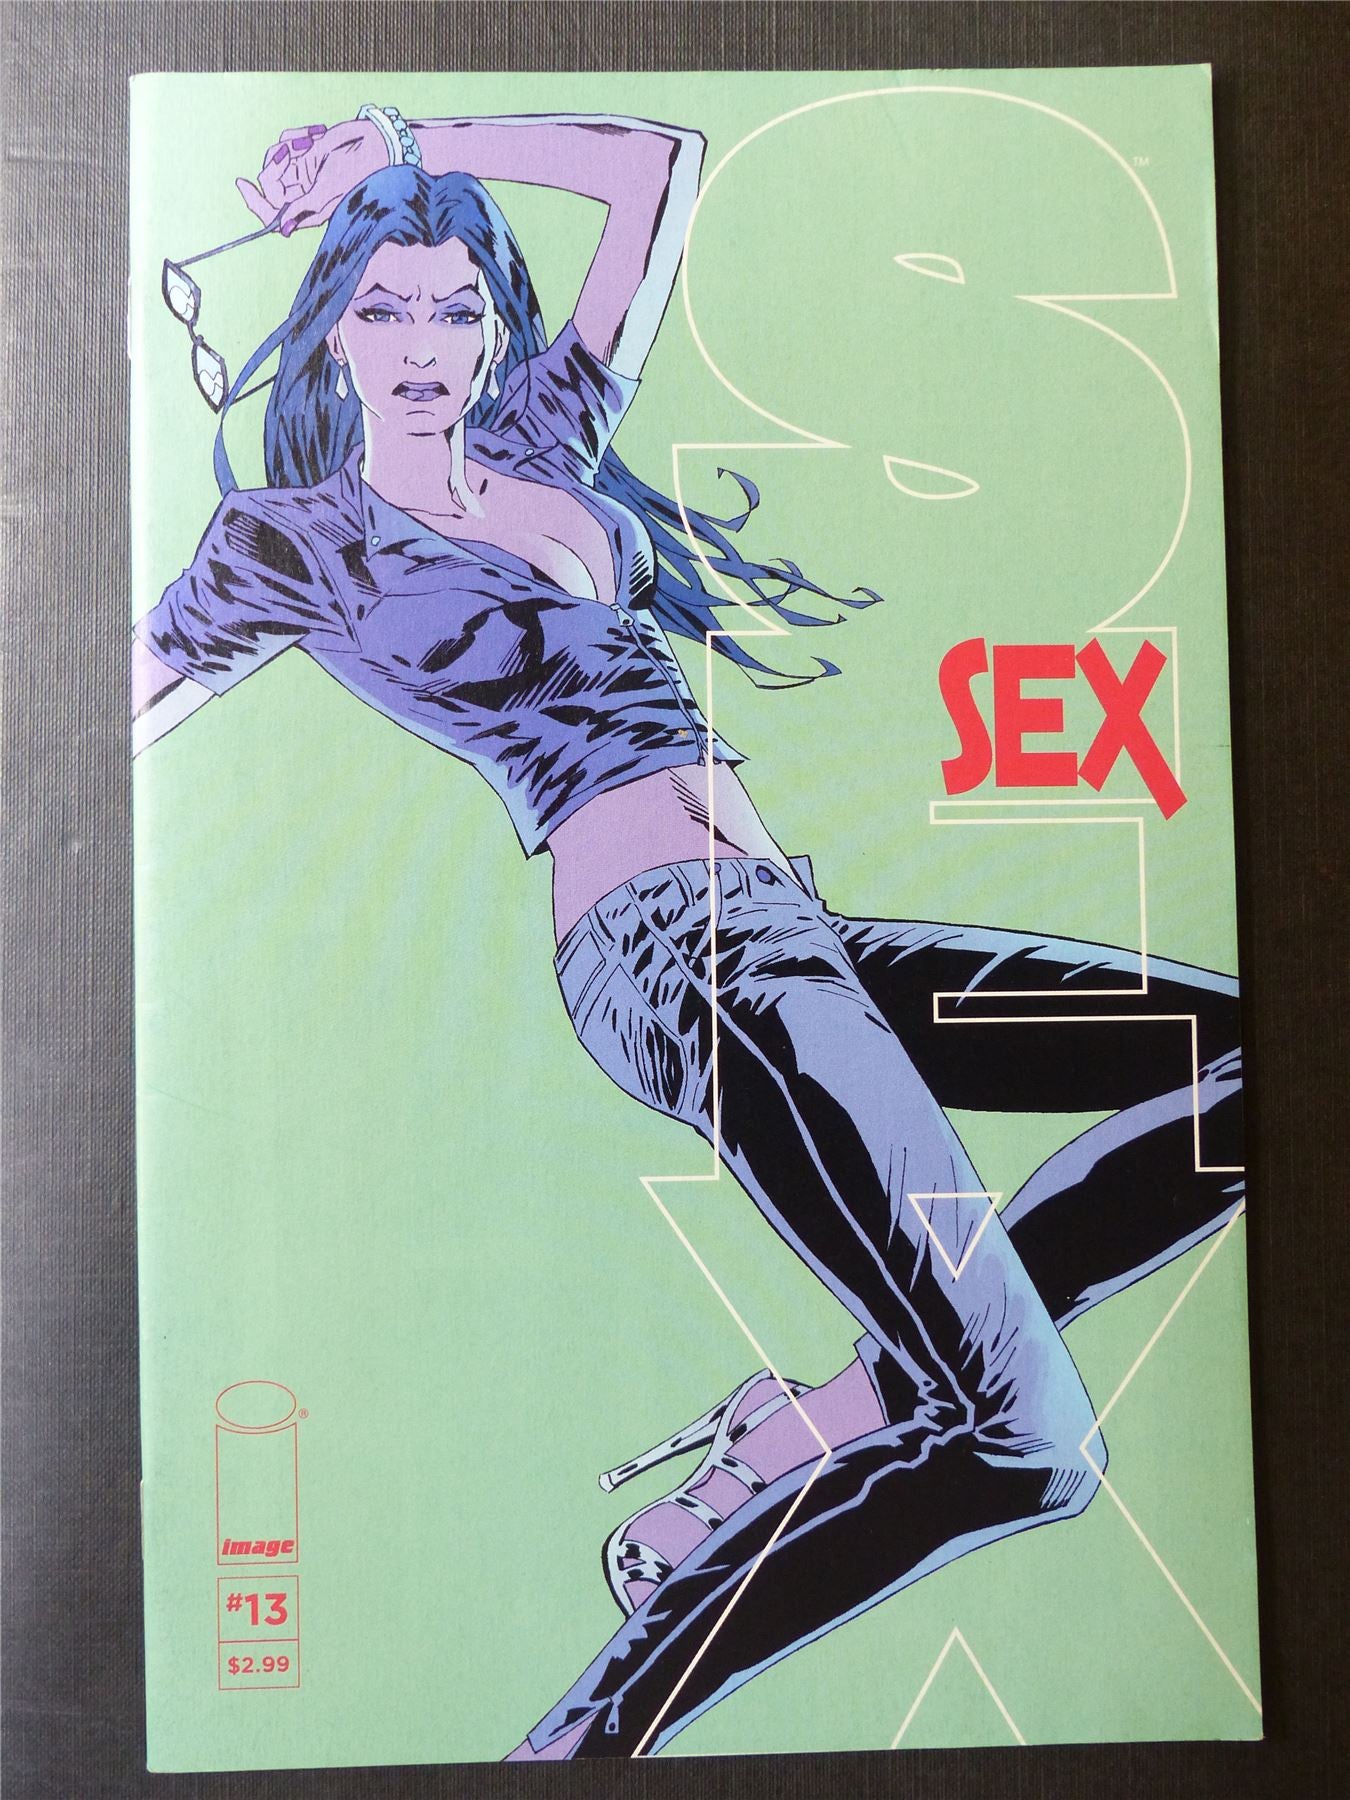 SEX #13 - Image Comics #1DM